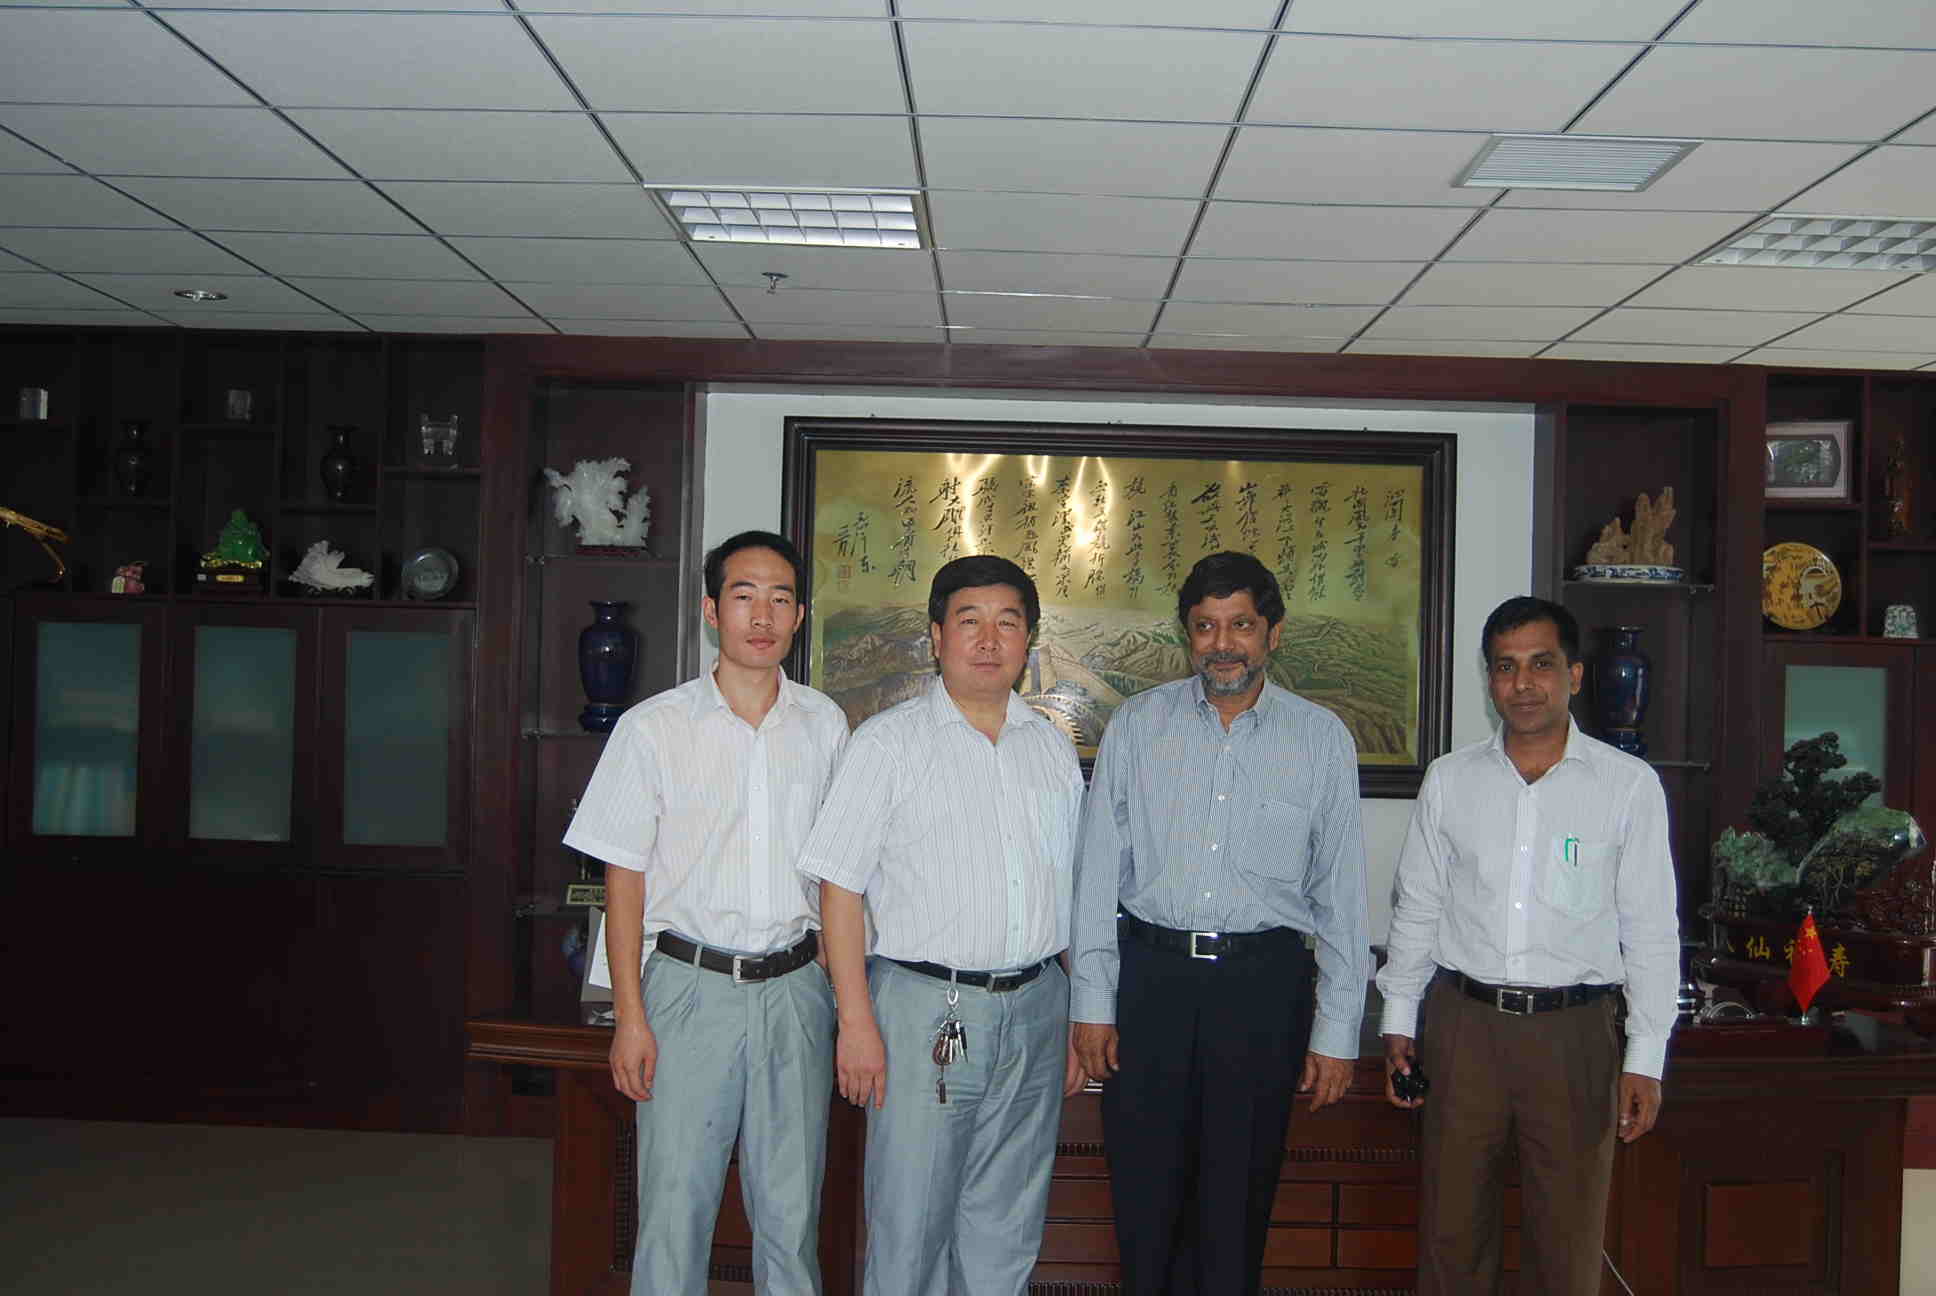 Bangladesh customers visit our company